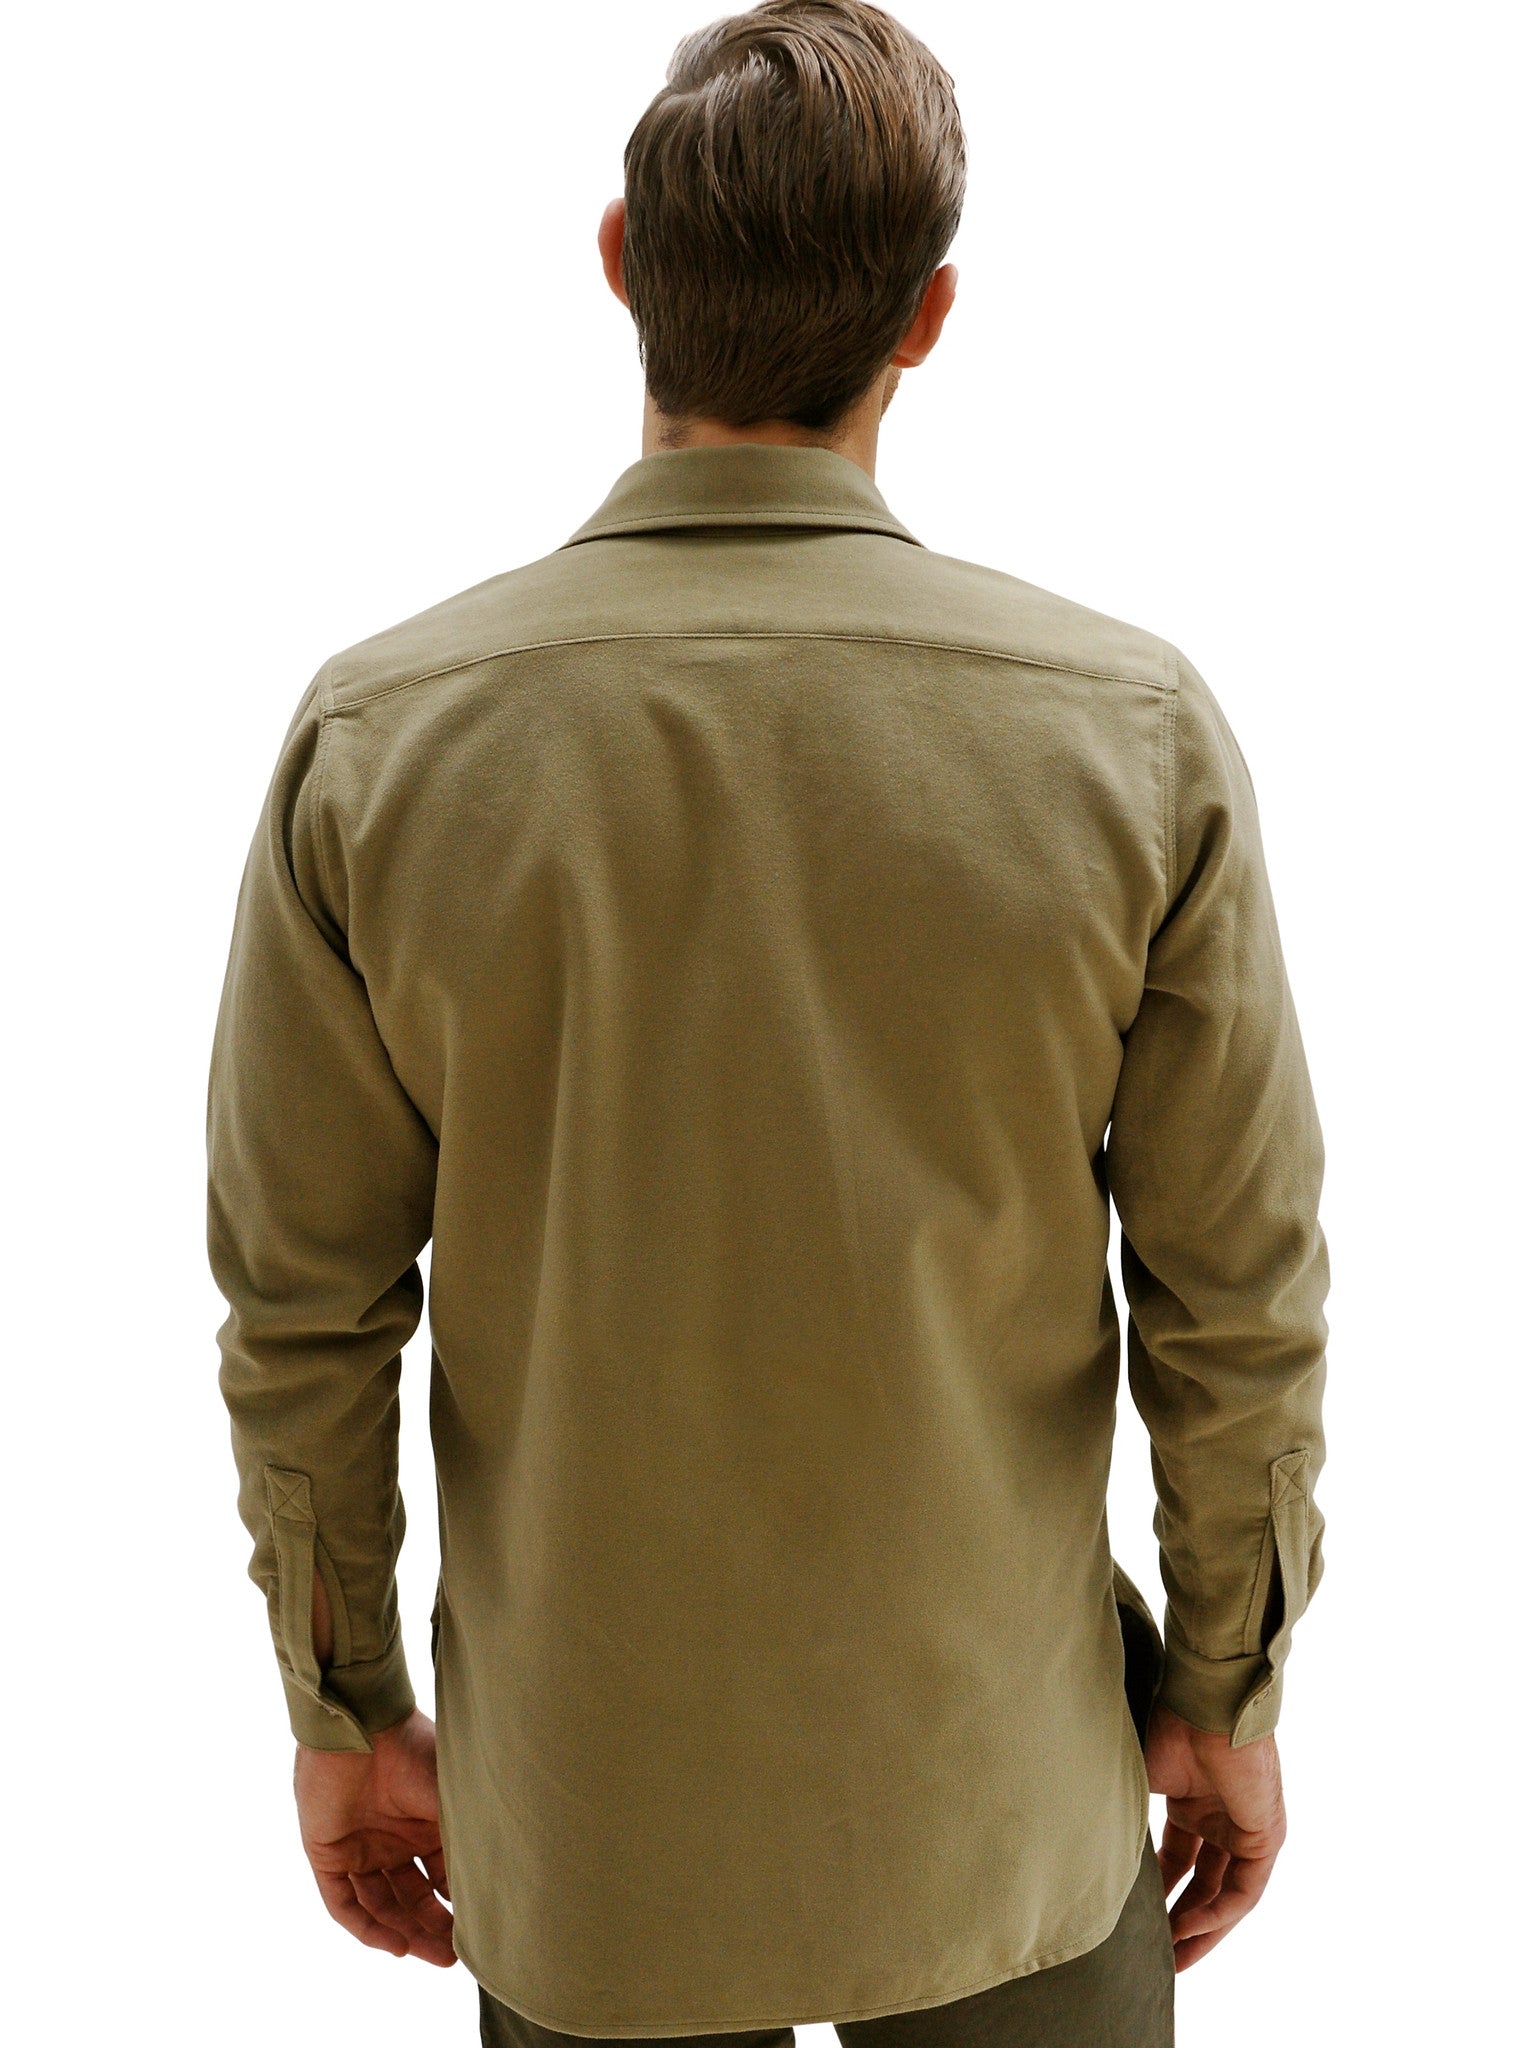 MEN'S SAFARI SHIRT, Shirt, Hickman & Bousfield - Hickman & Bousfield, Safari and Travel Clothing